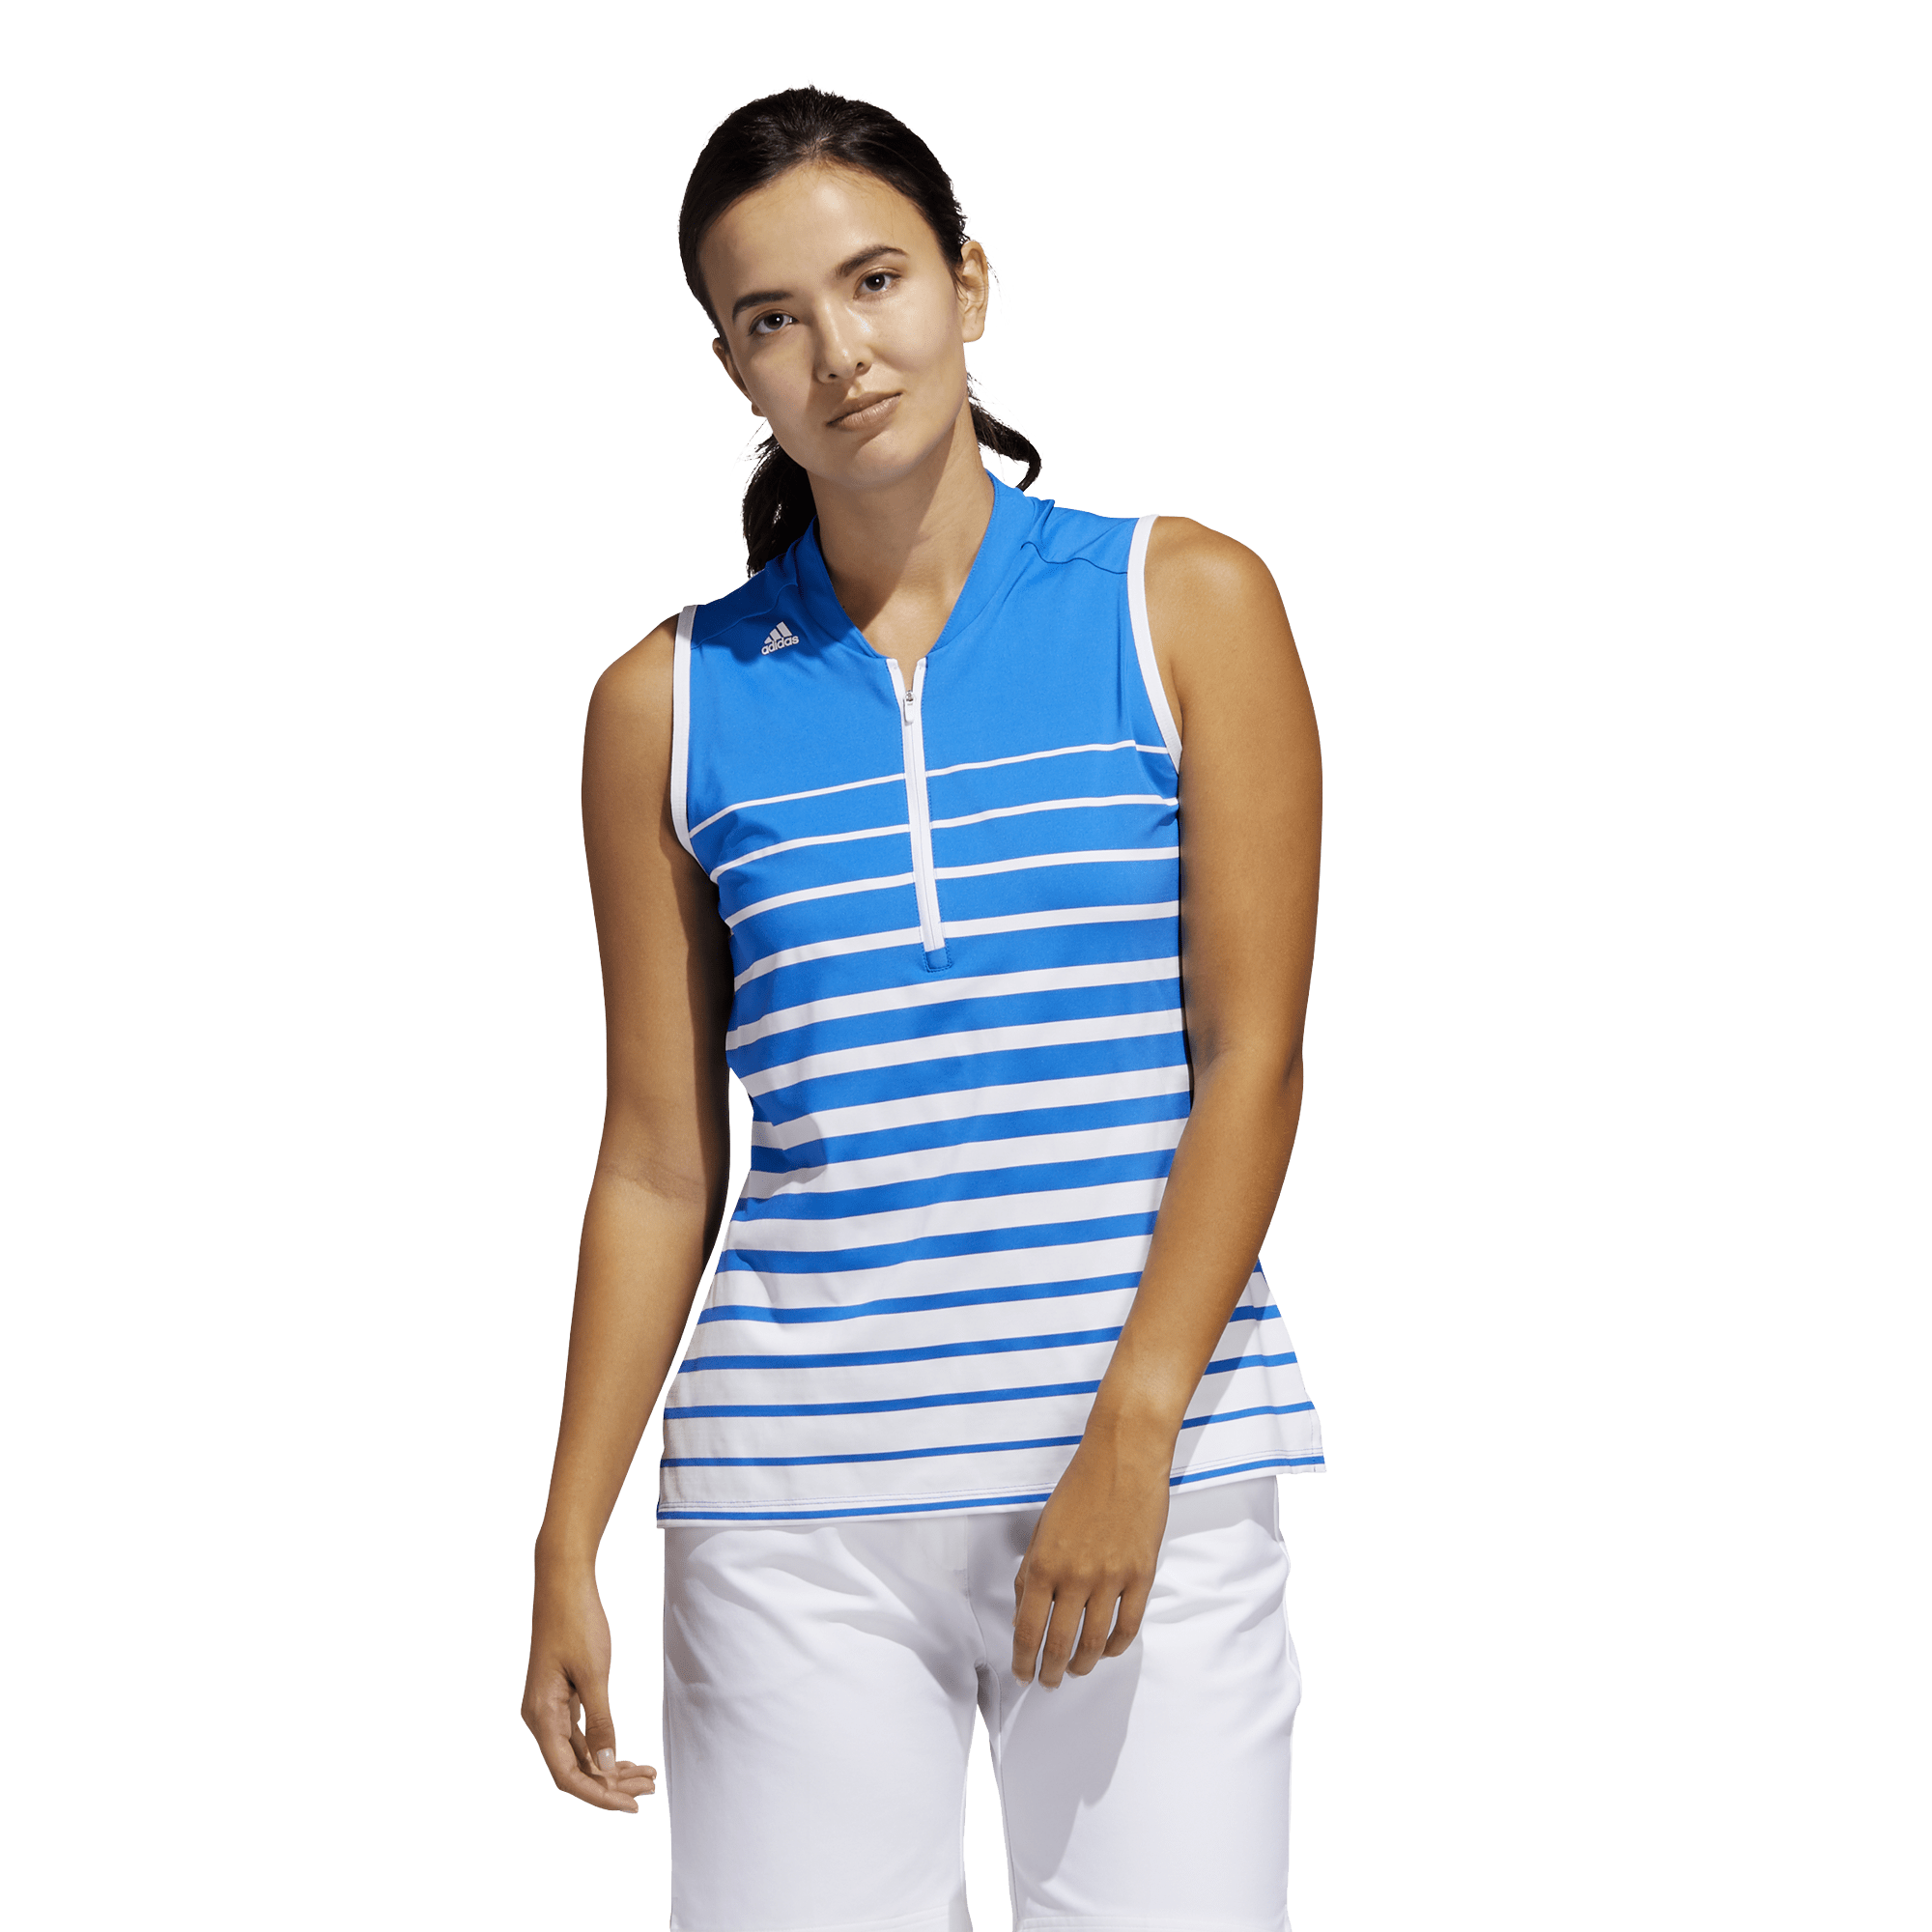 adidas women's golf shirts